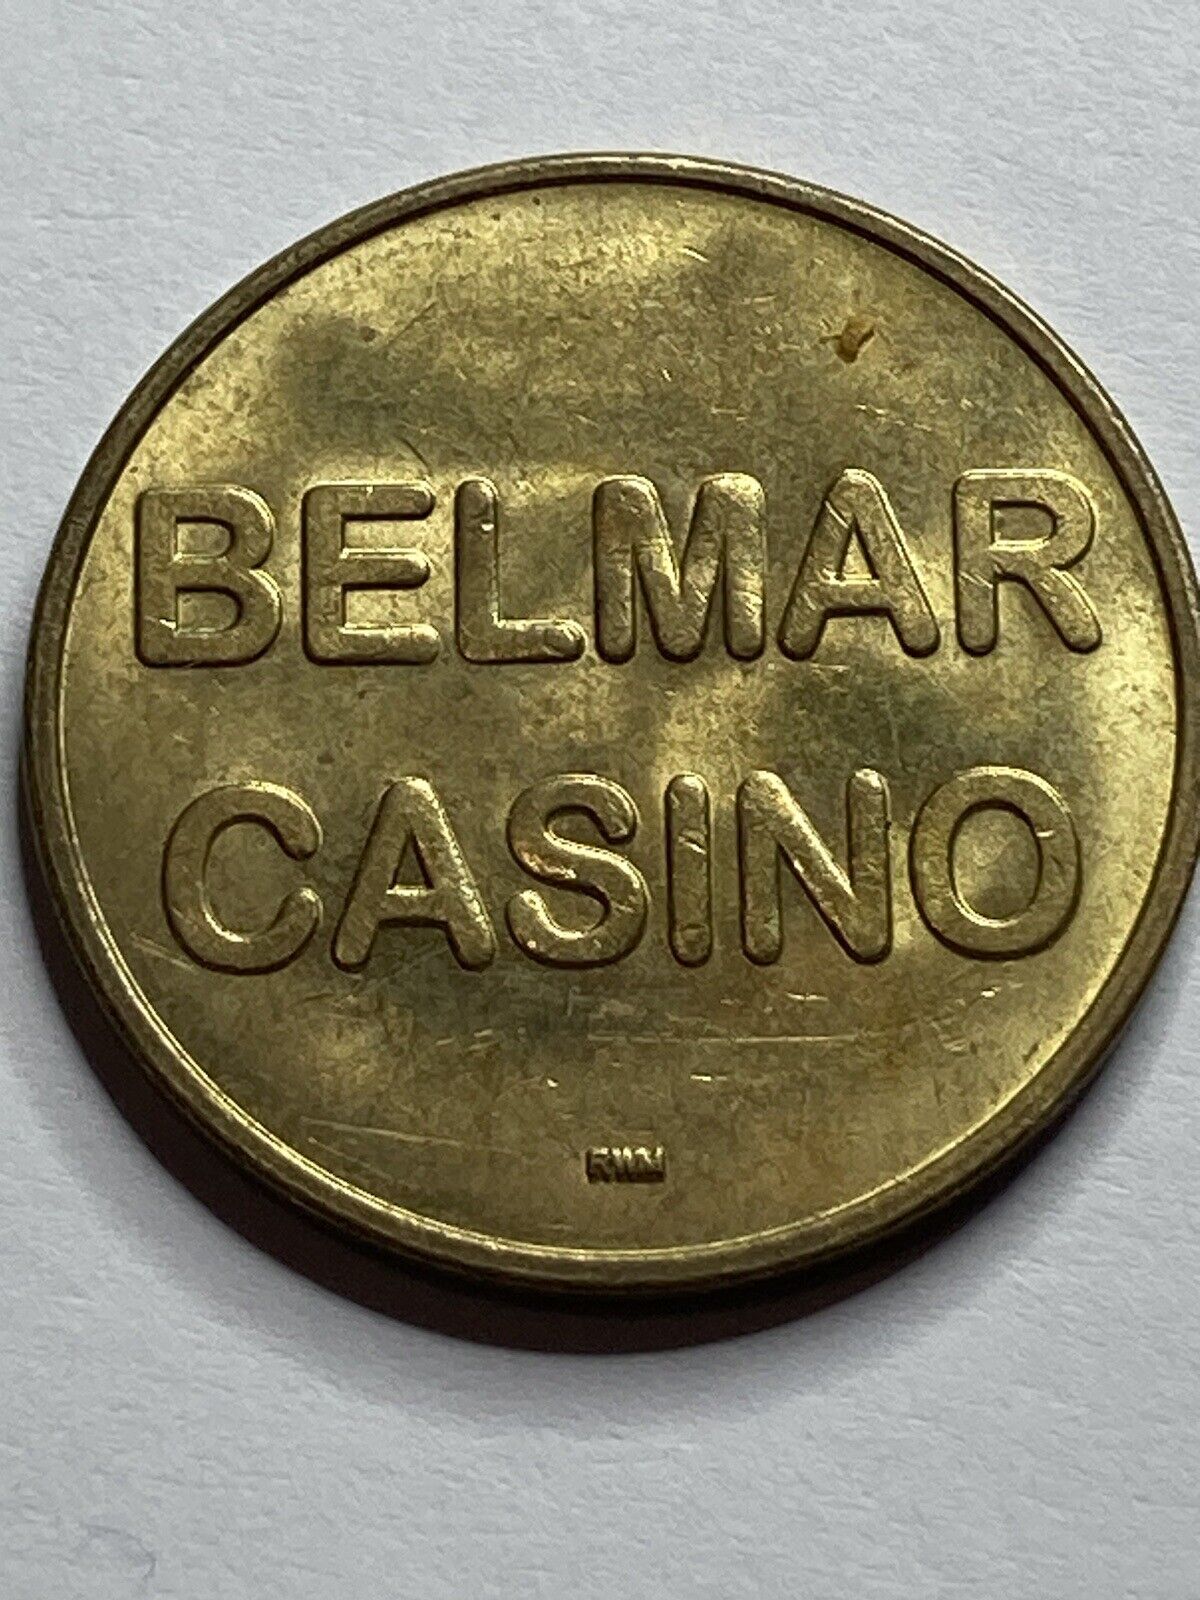 Belmar, New Jersey Belmar Casino 5 Points Arcade Game Token #rr1